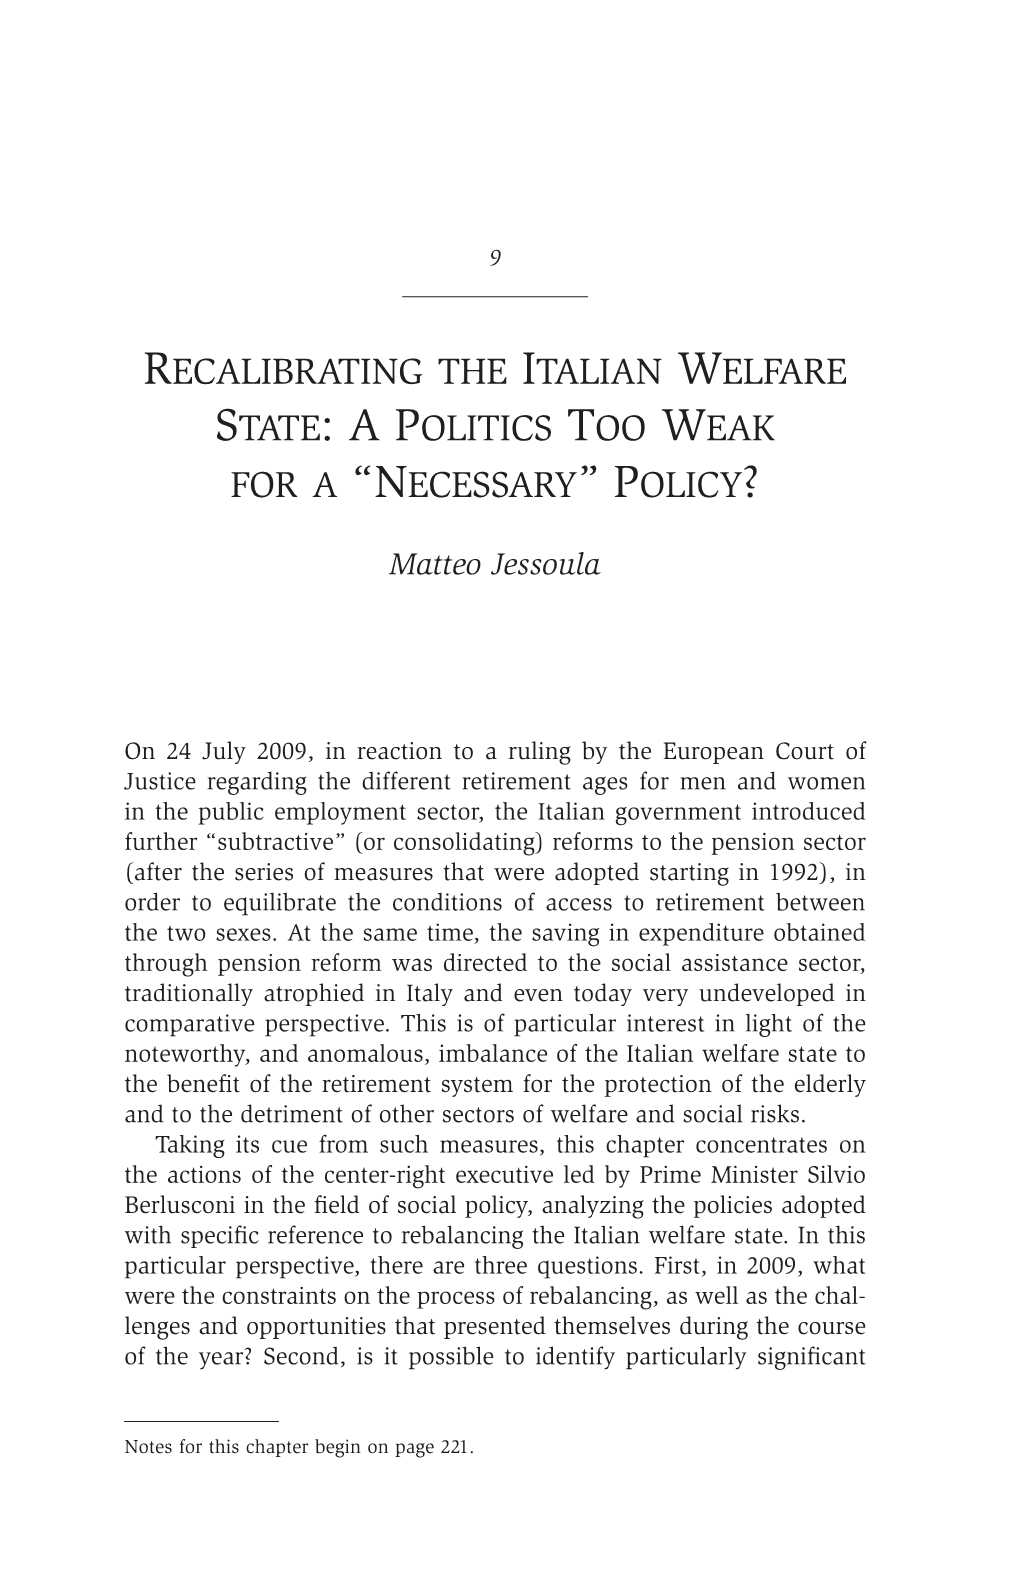 Recalibrating the Italian Welfare State: a Politics